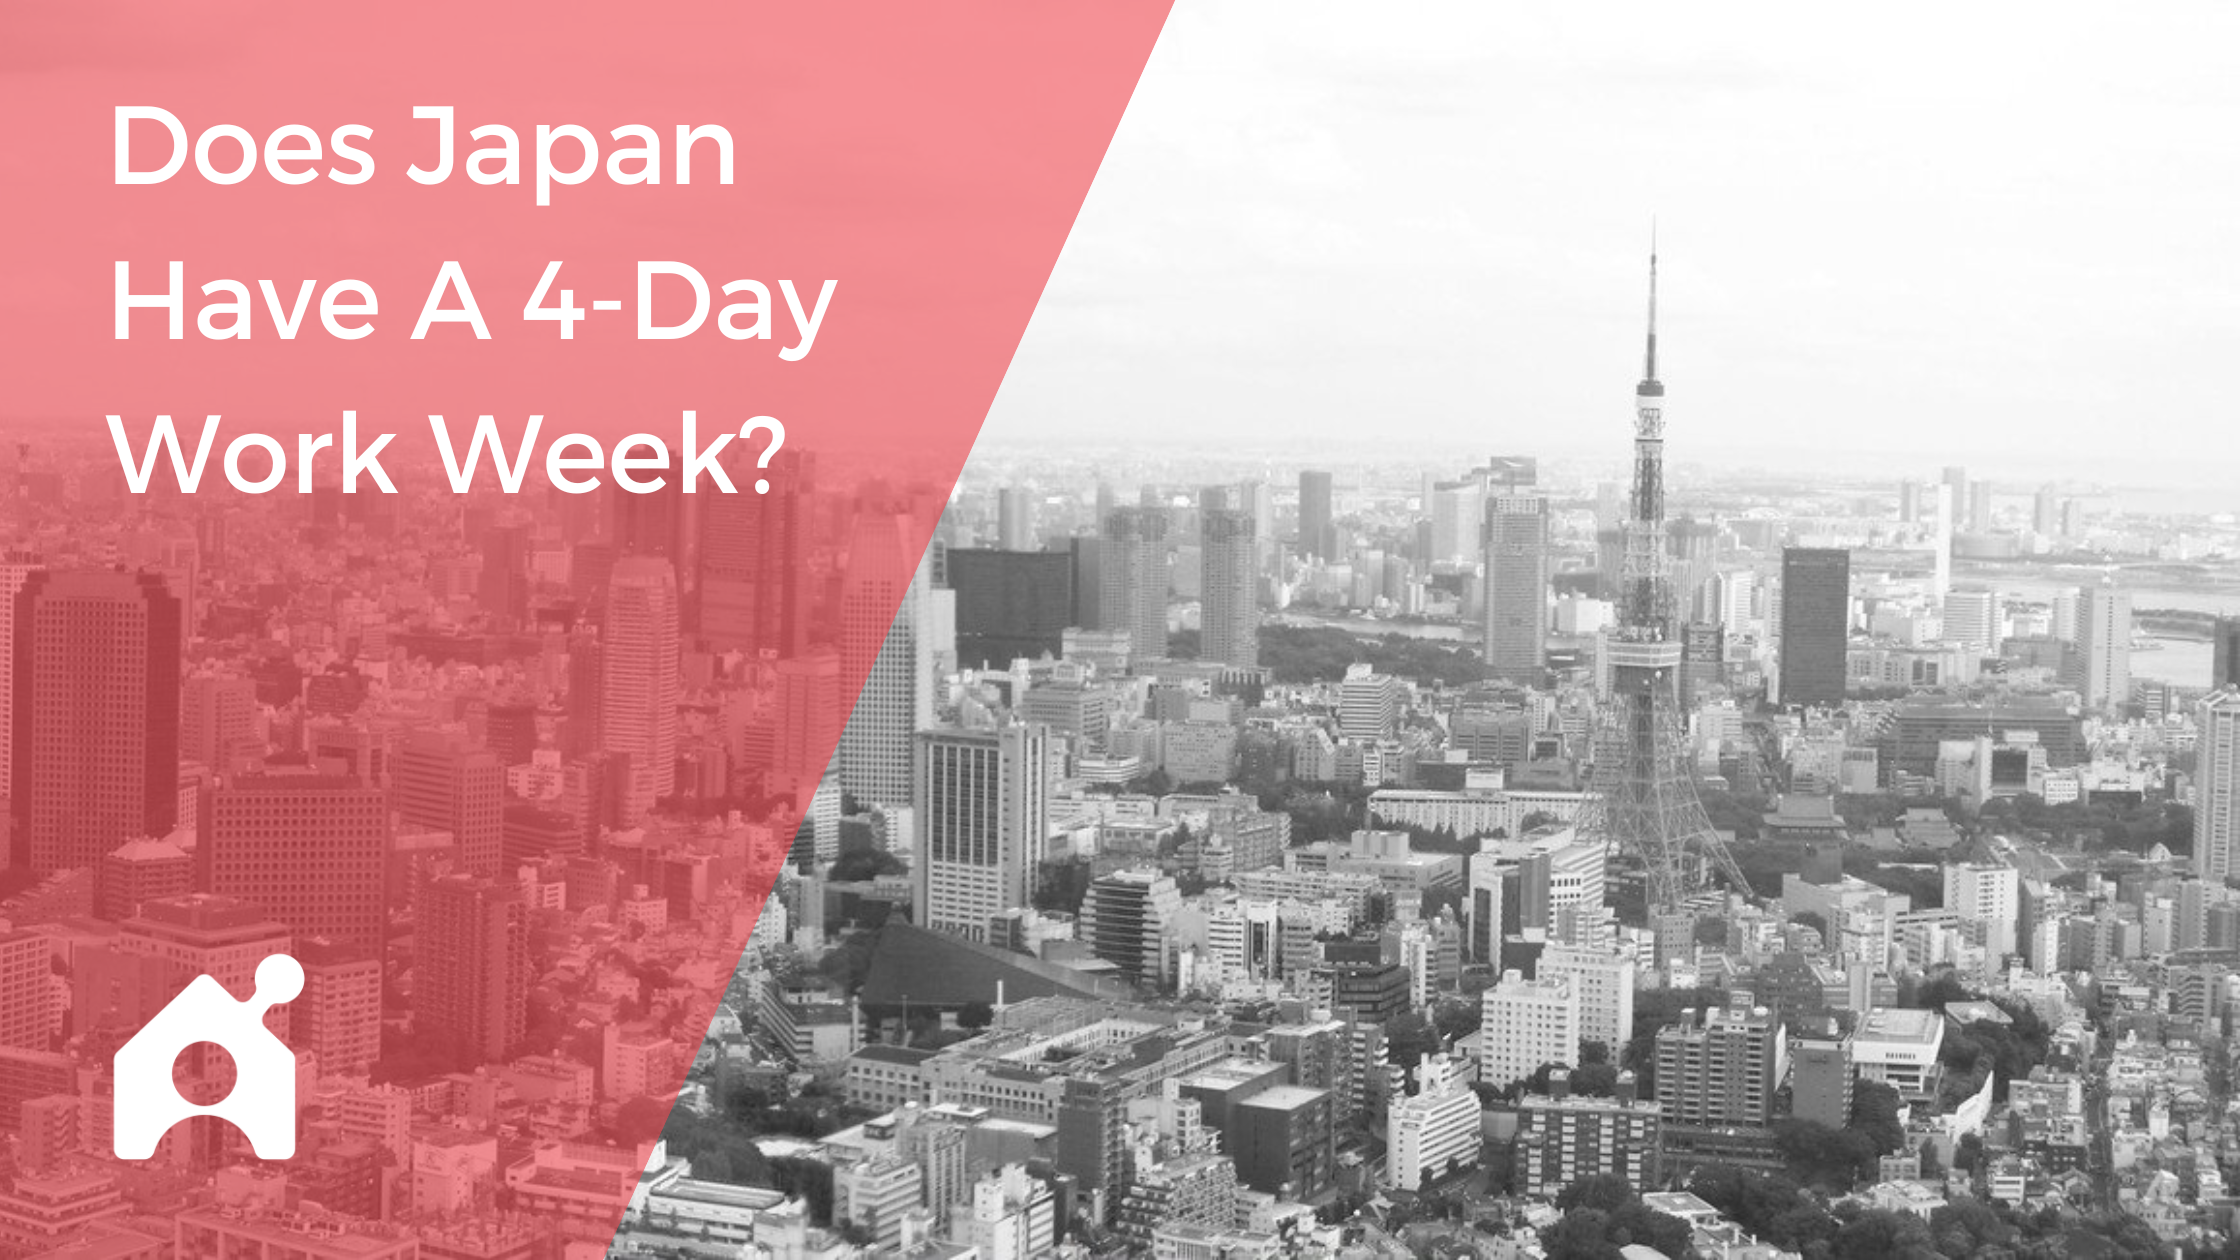 Japan's 4 day work week story